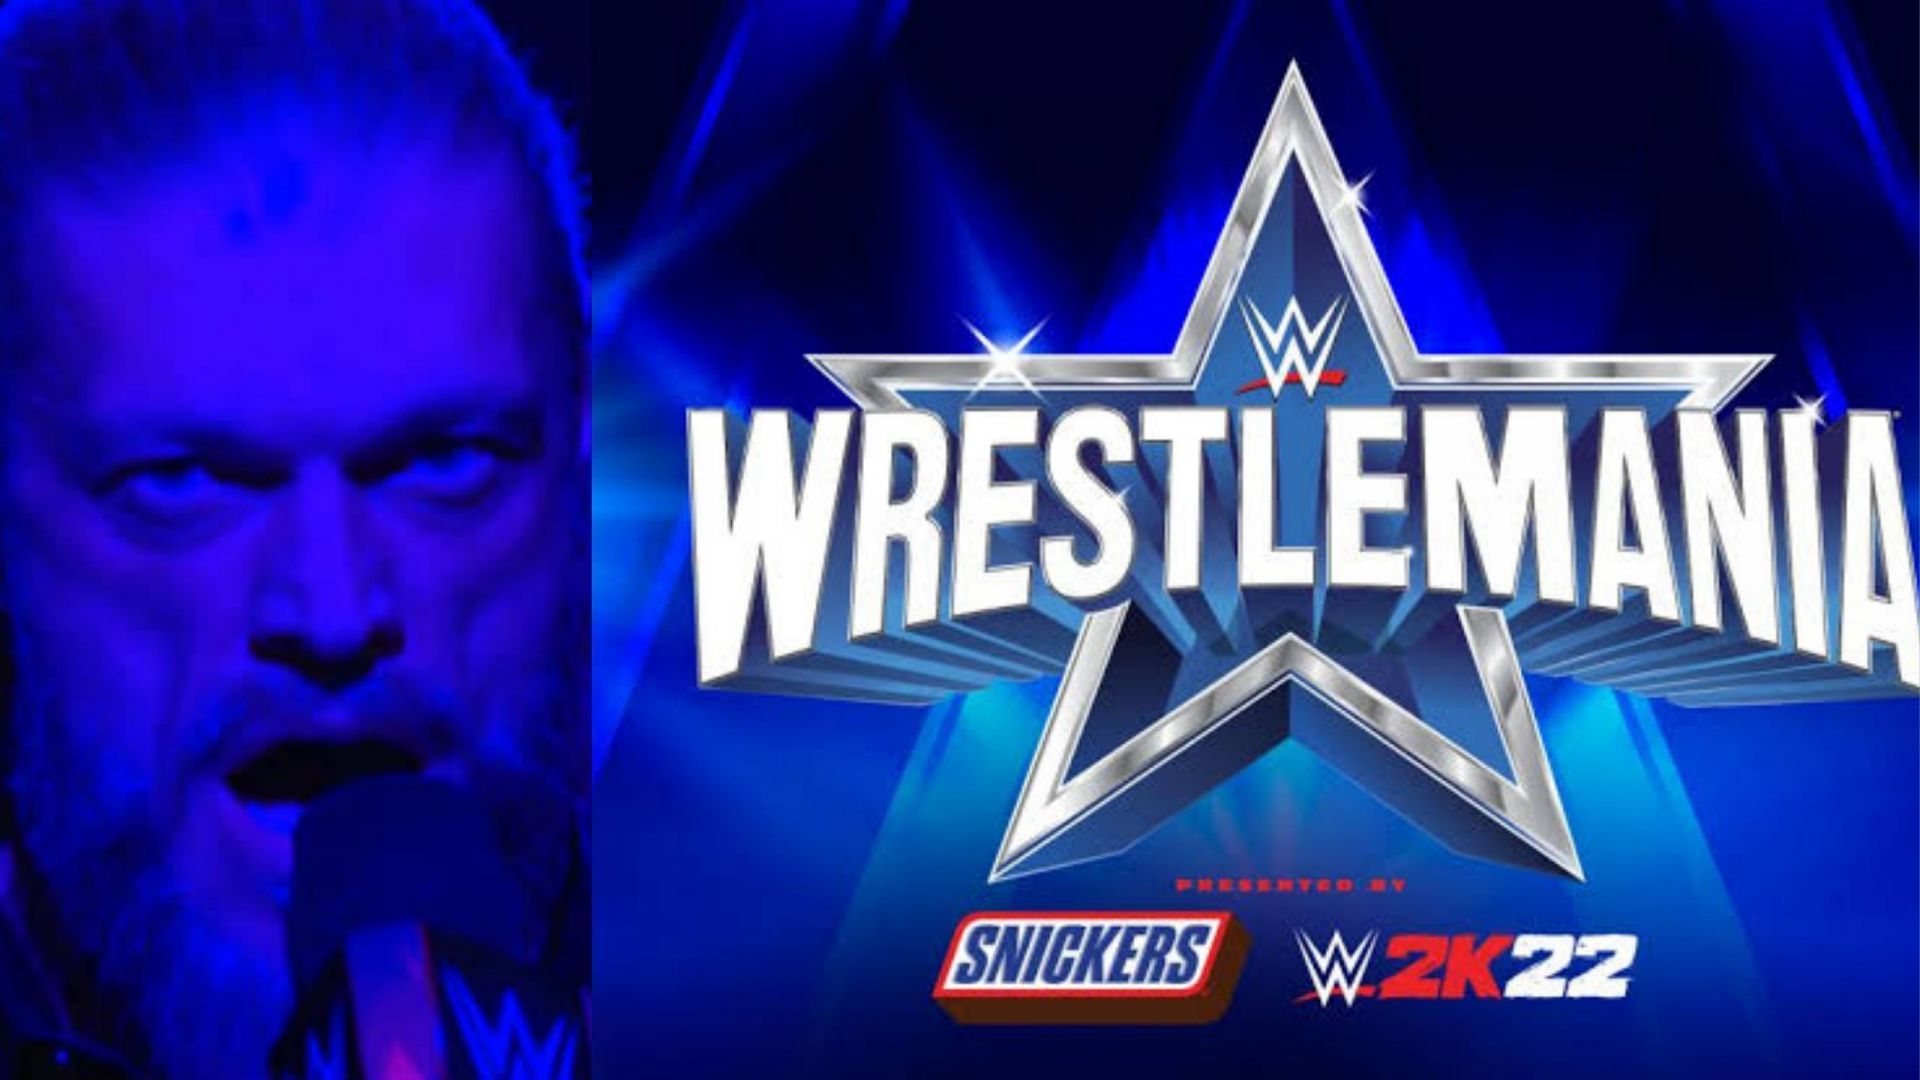 How many matches has Edge won at WrestleMania?